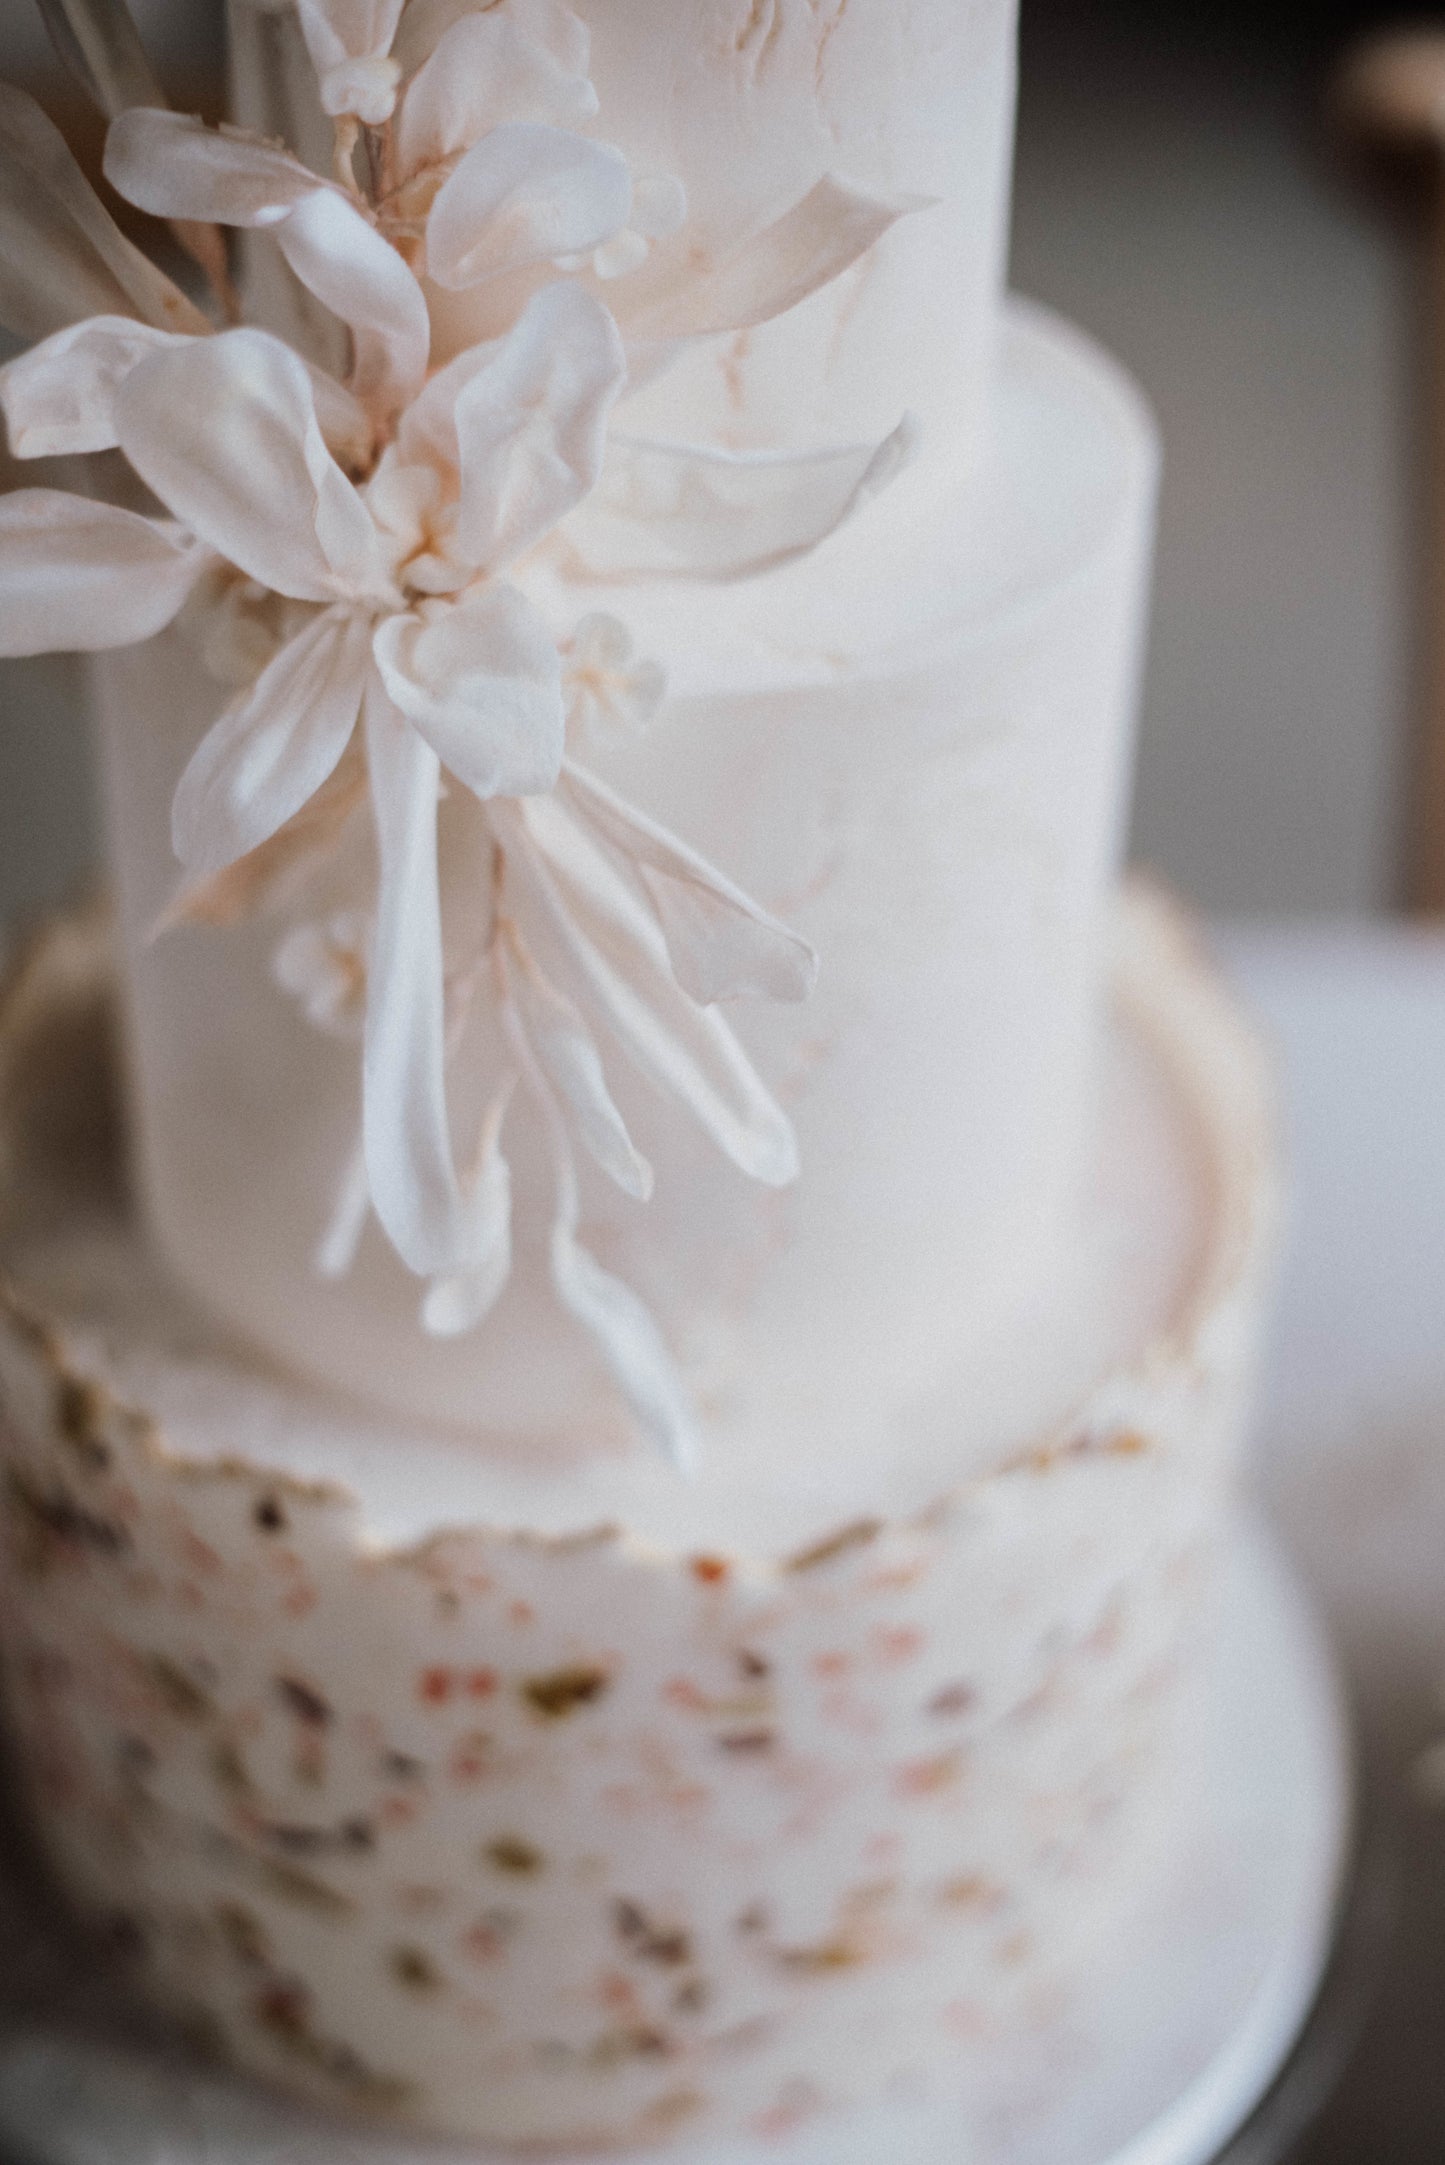 fantasy flowers from terrazzo wedding cake